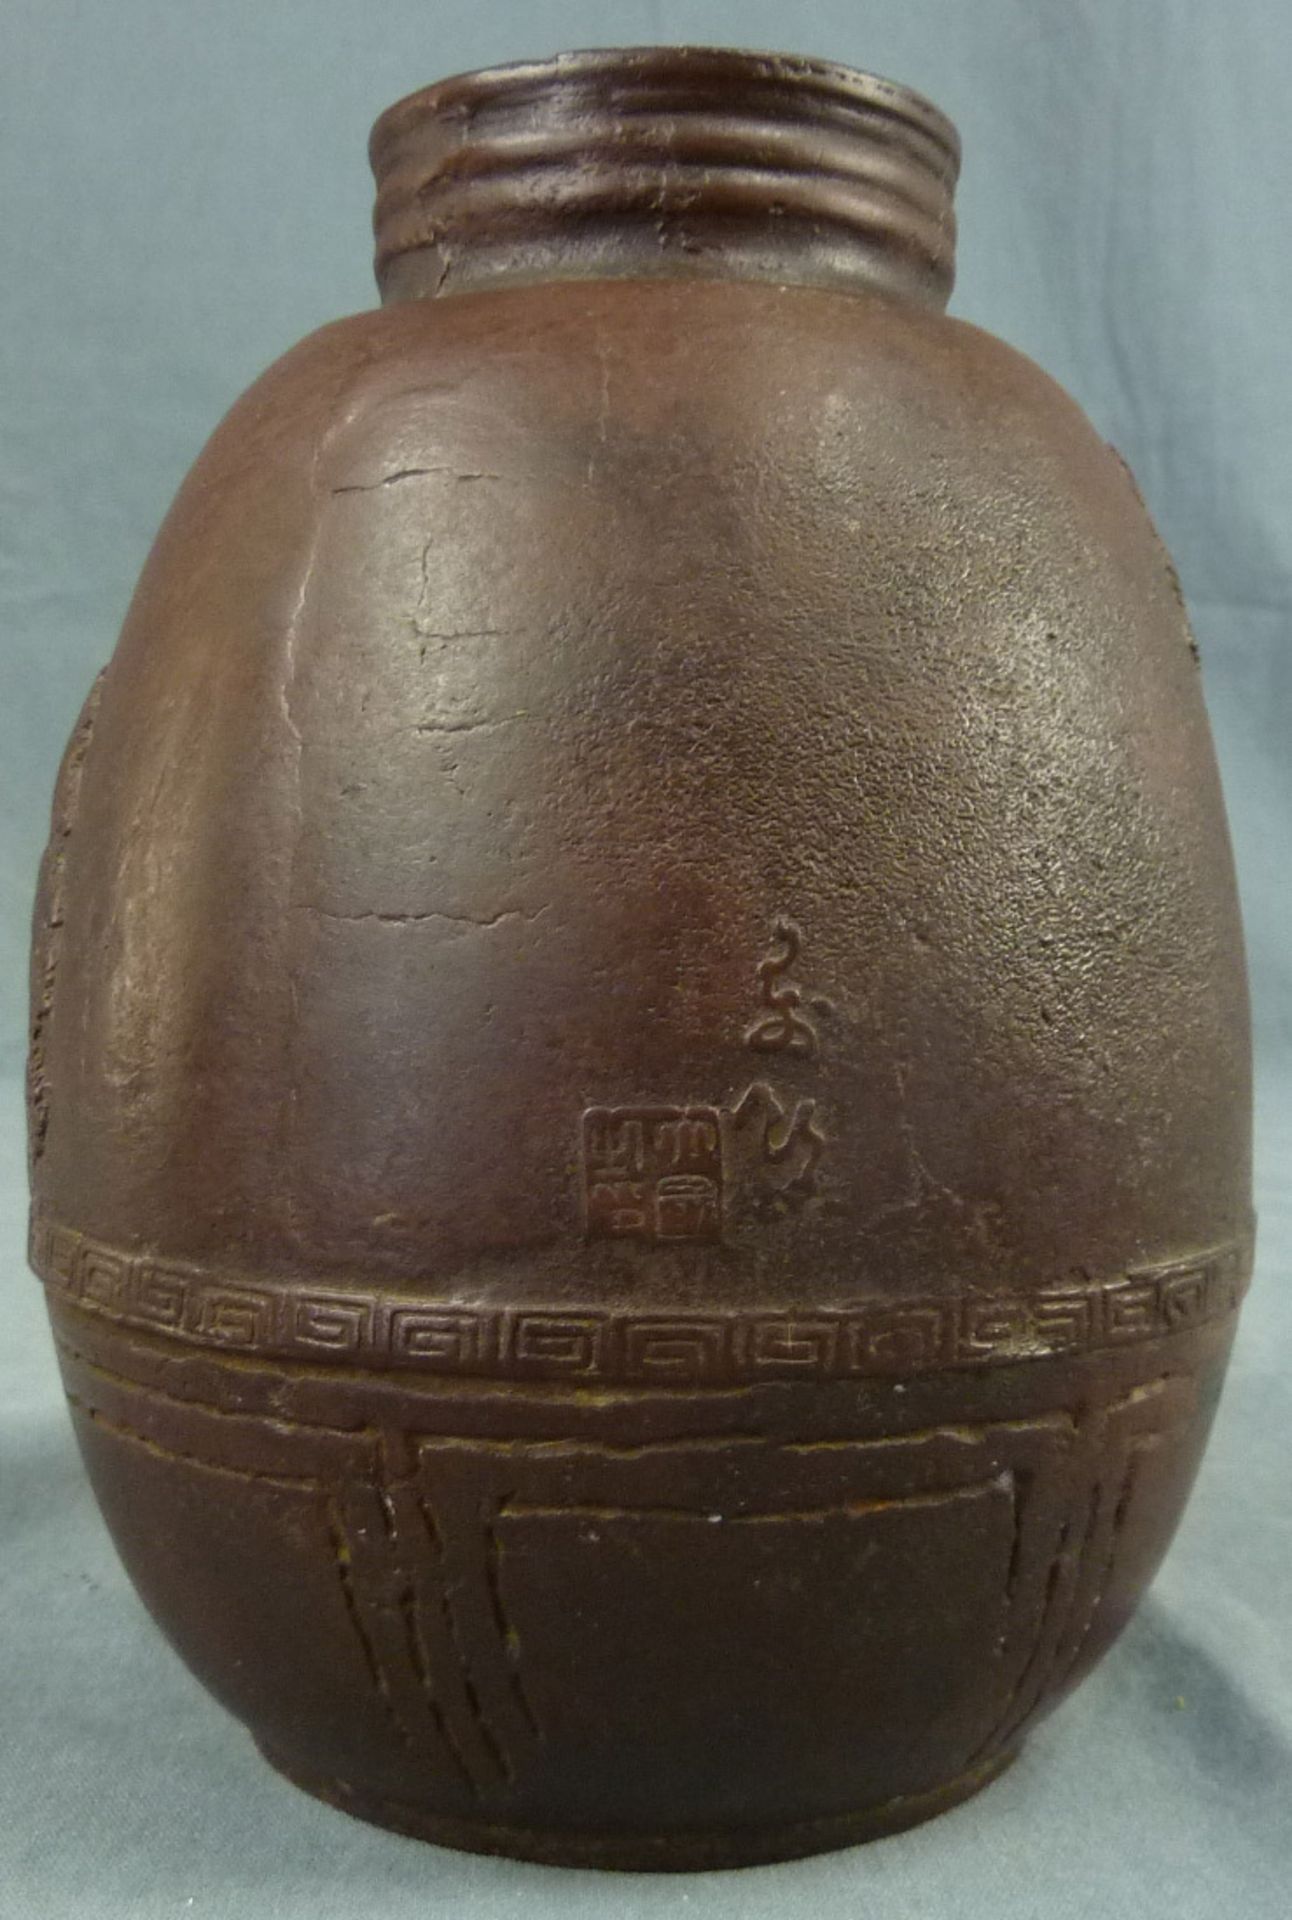 Vase. China / Japan? Bronzed. Inscriptions. Cast iron?17 cm high.Vase. Wohl China / Japan. - Bild 4 aus 8